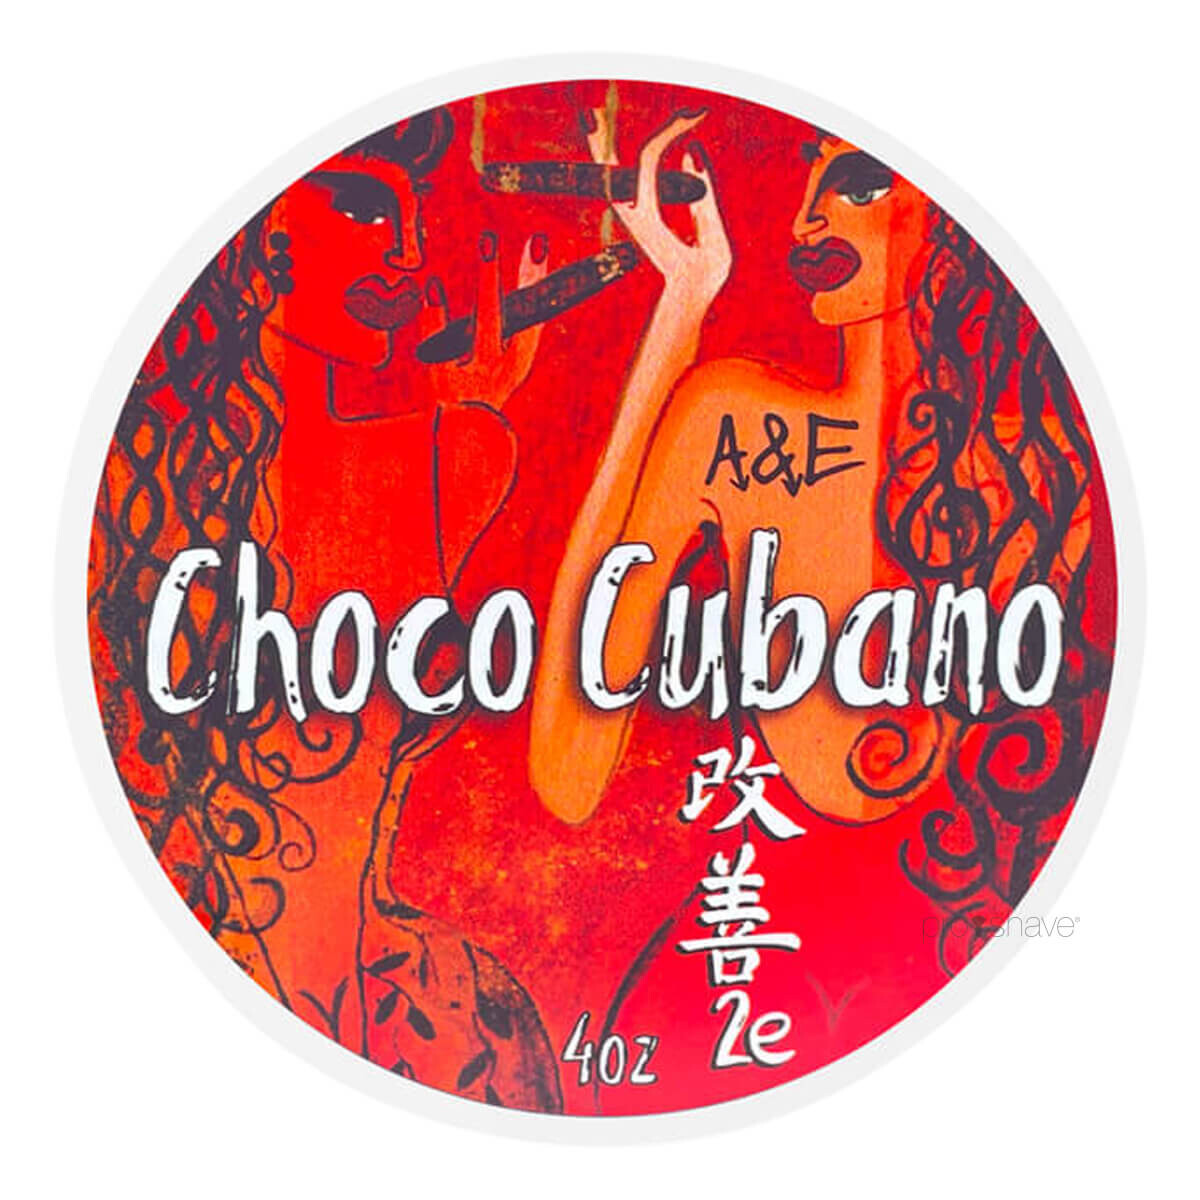 Ariana & Evans Barbersæbe, Choco Cubano, 118 ml.